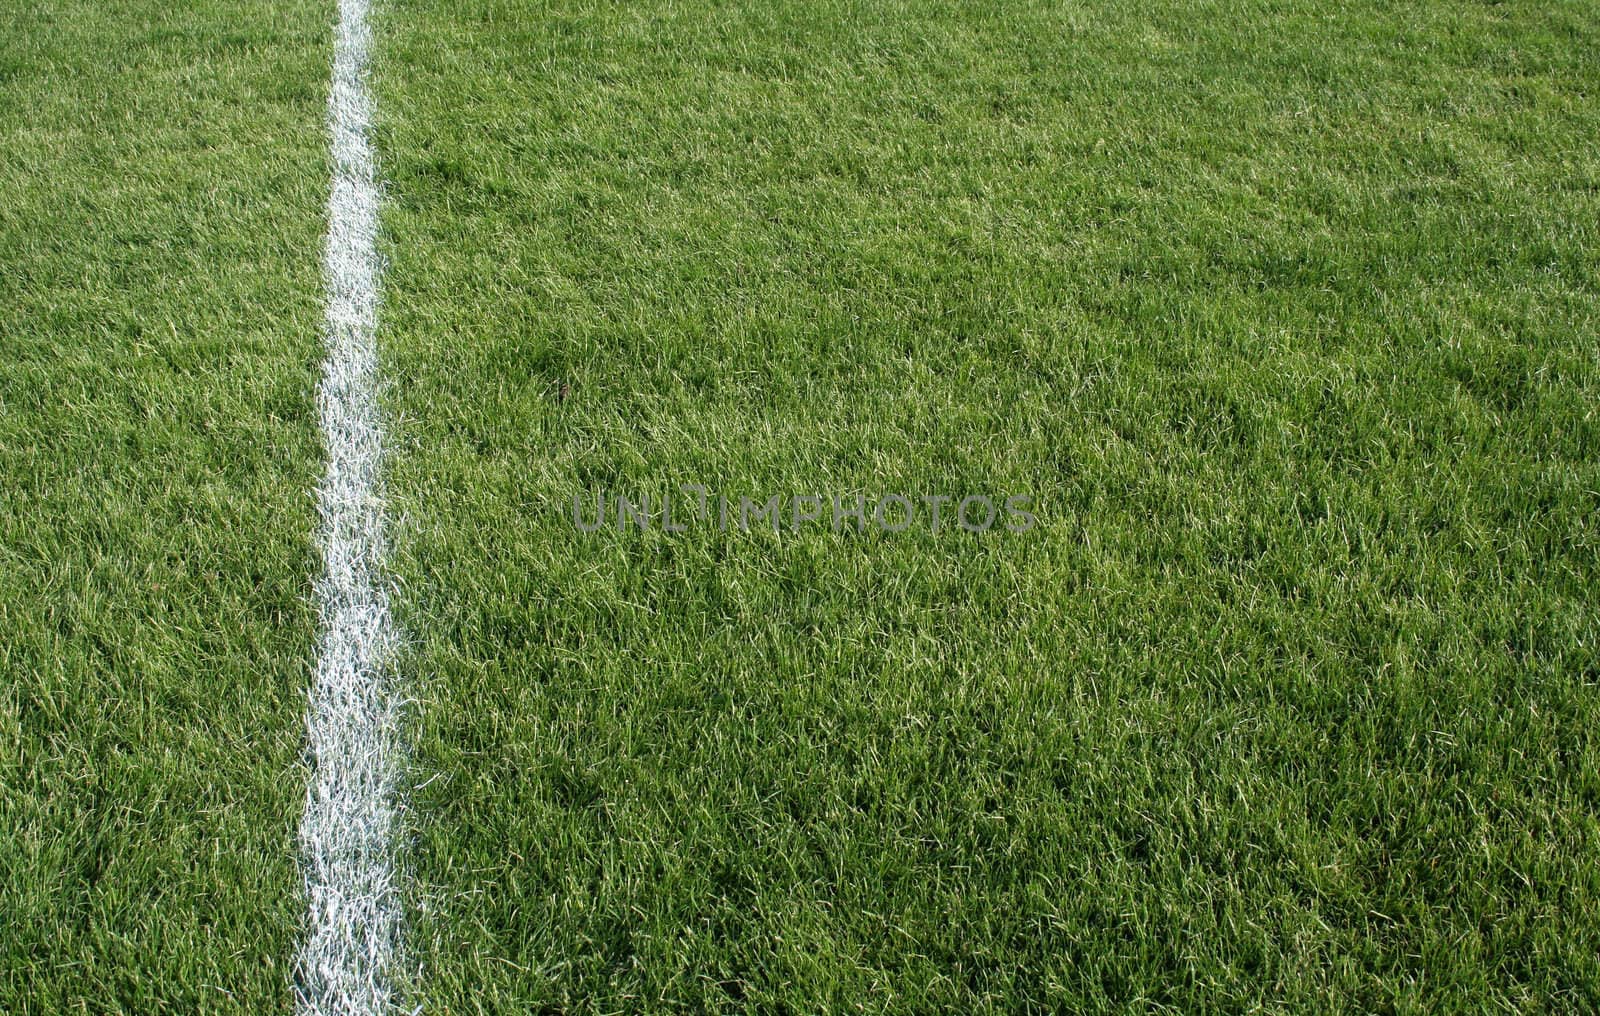 A closeup of a white line on a grass sports field.
